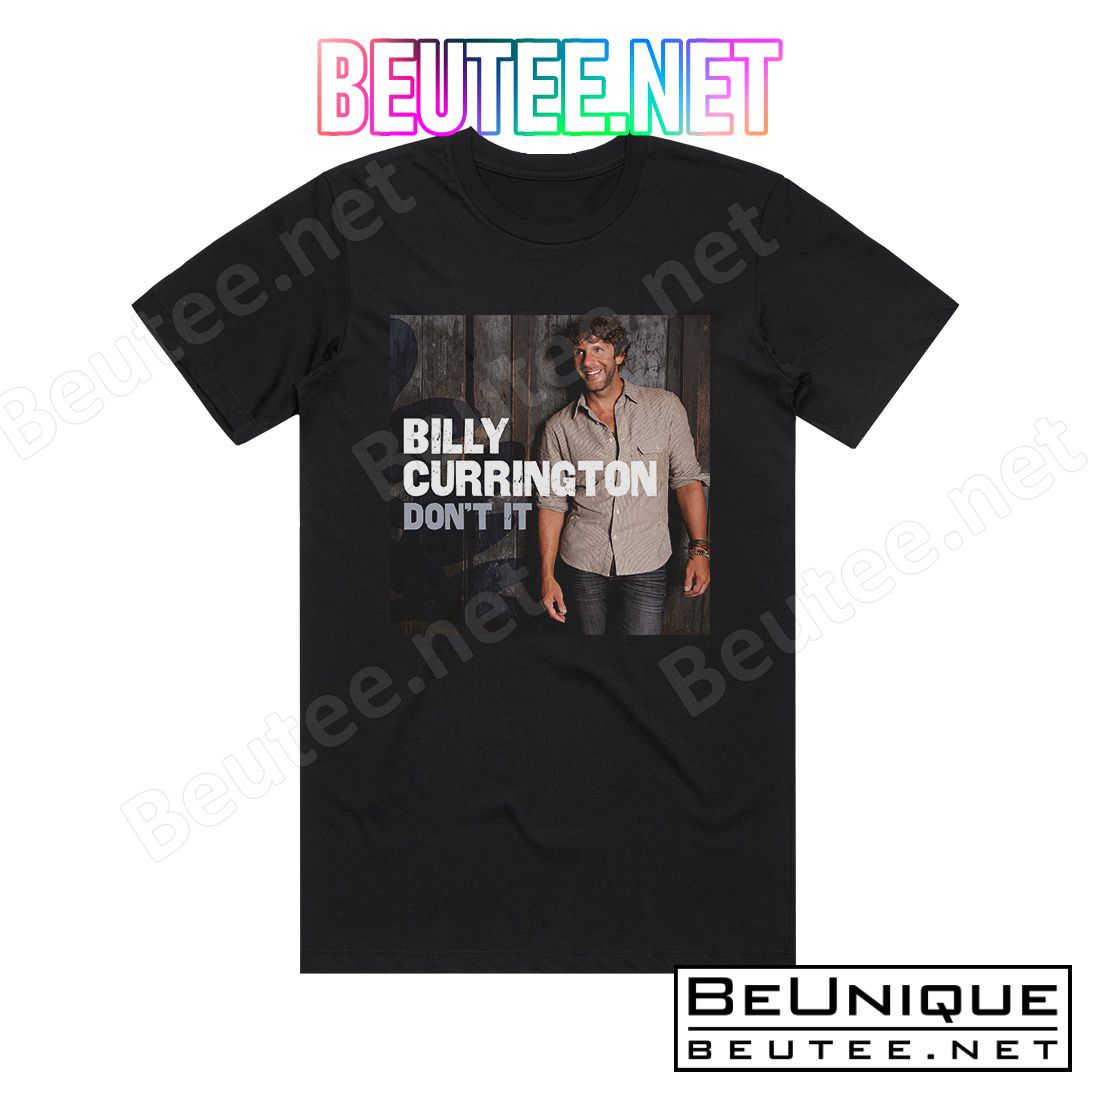 Billy Currington Don't It Album Cover T-Shirt